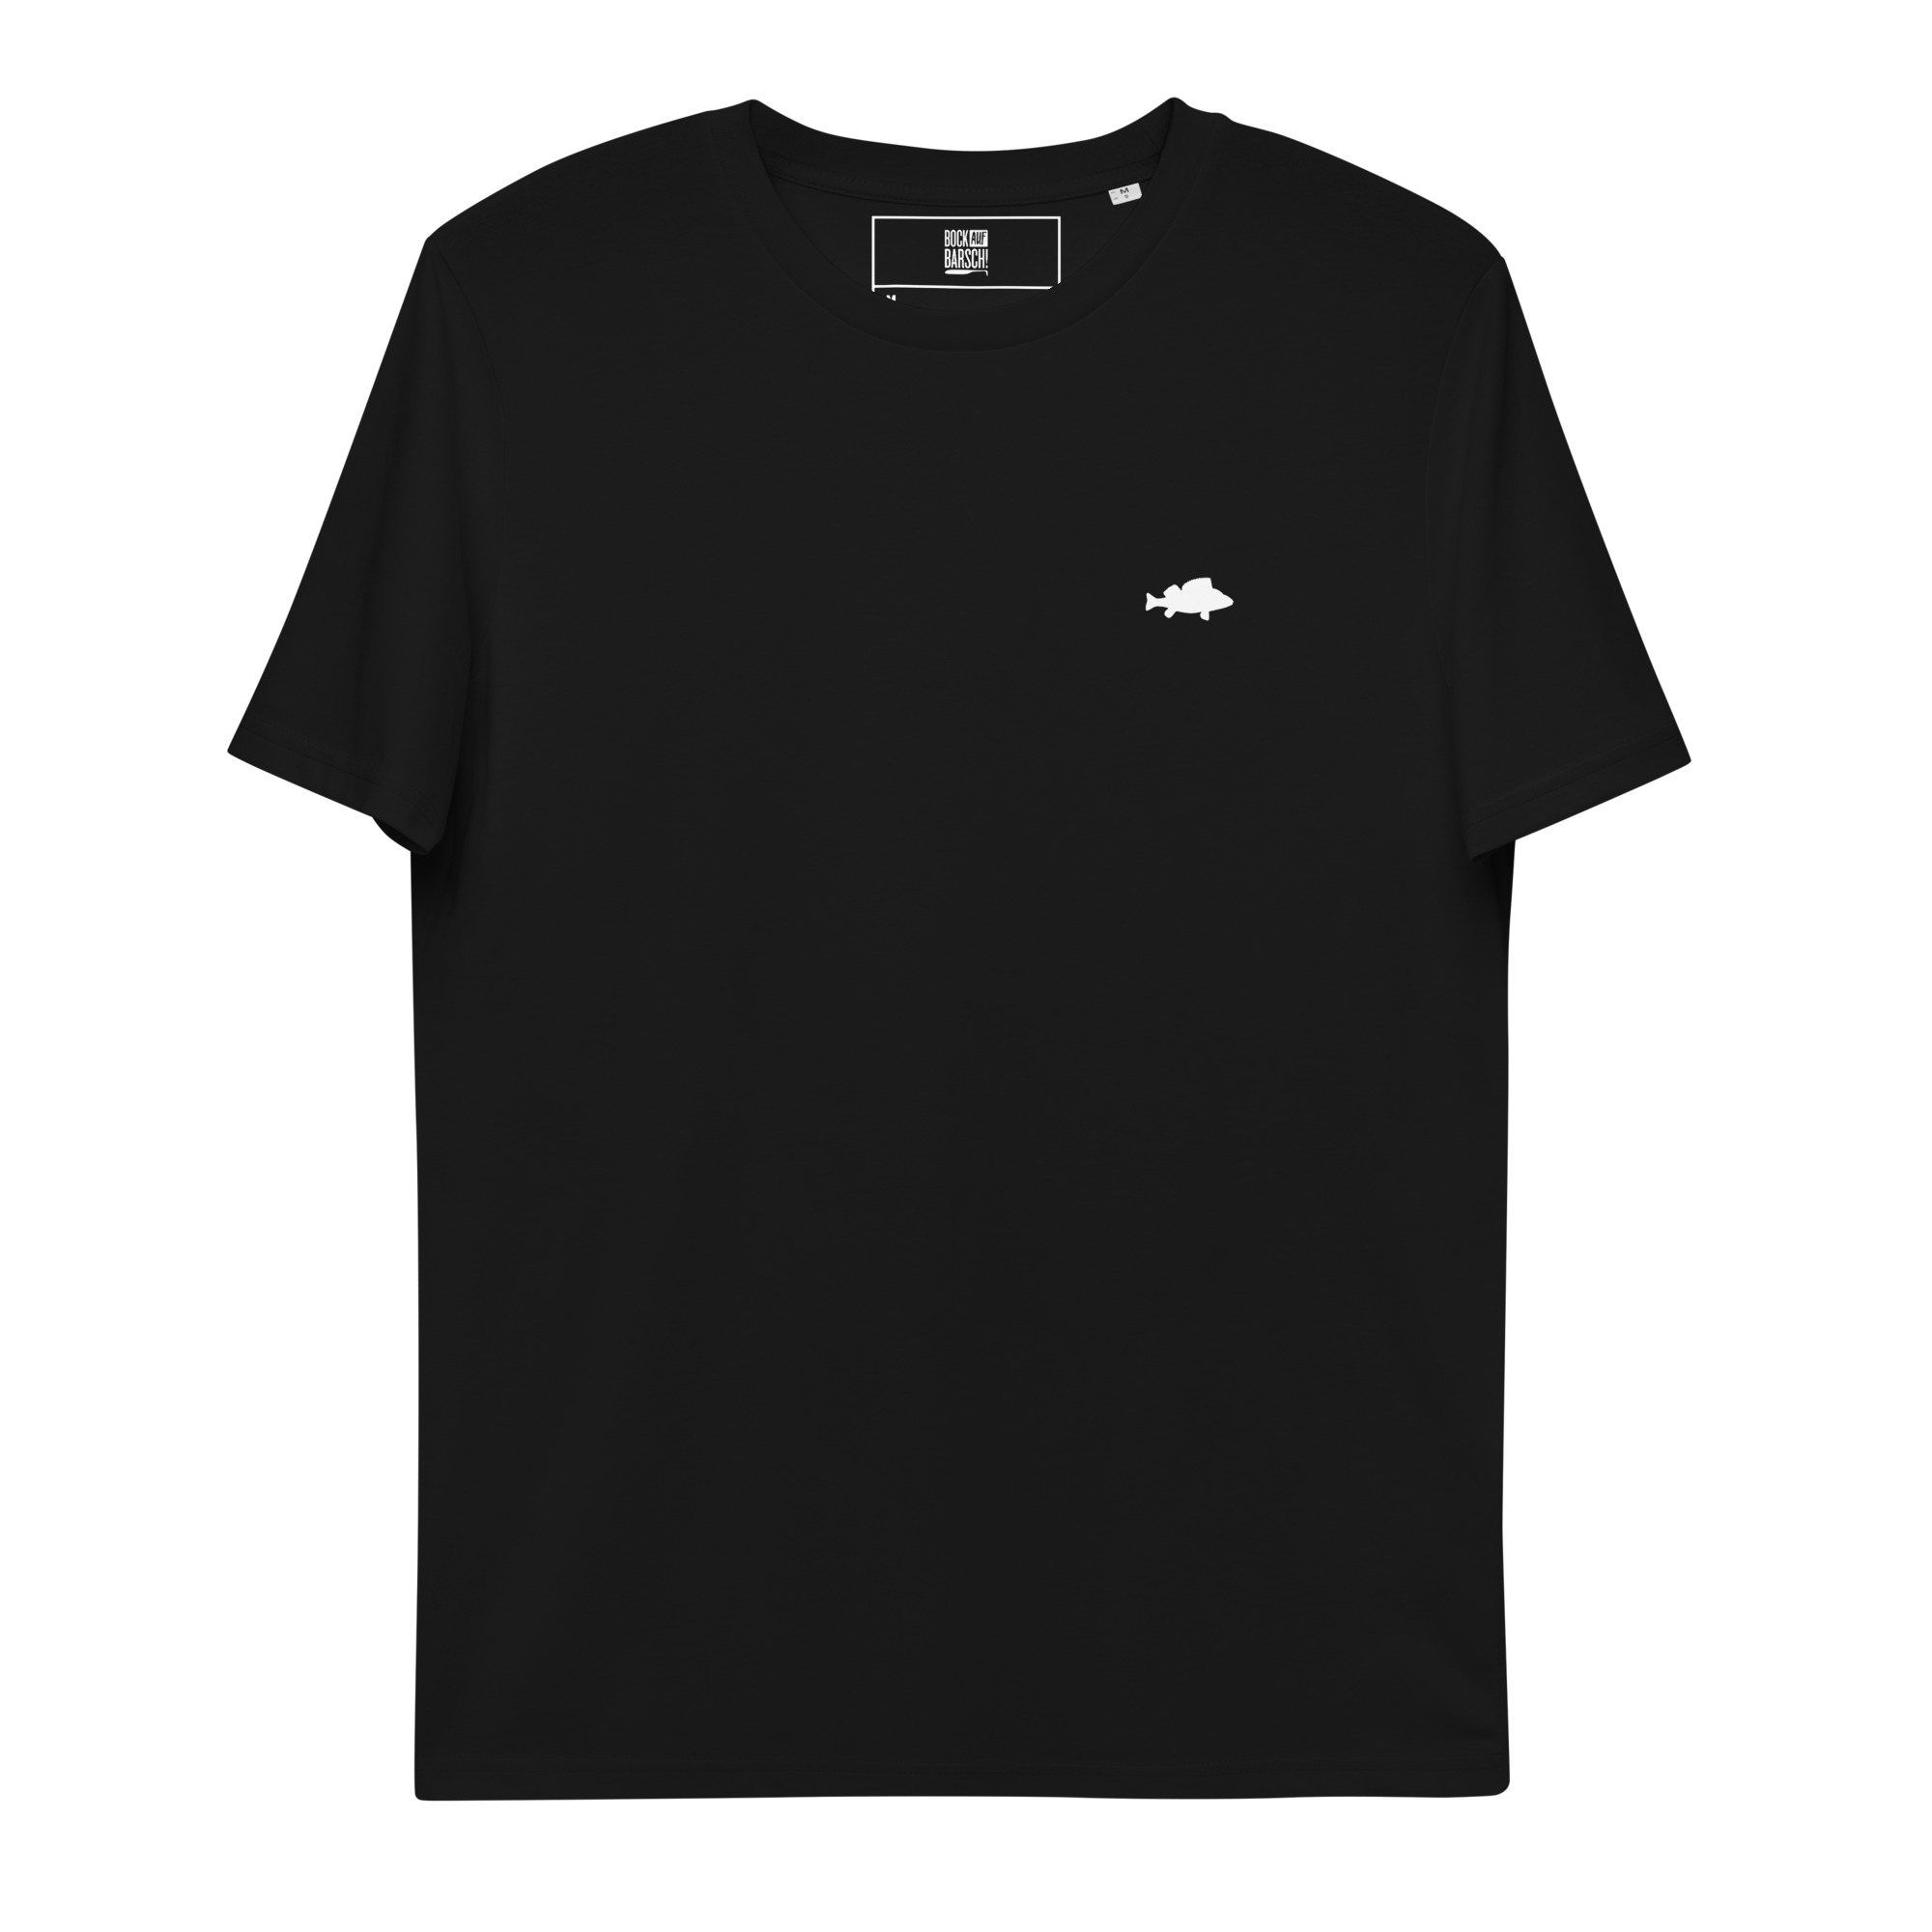 unisex-organic-cotton-t-shirt-black-front-6536593905d5e.jpg